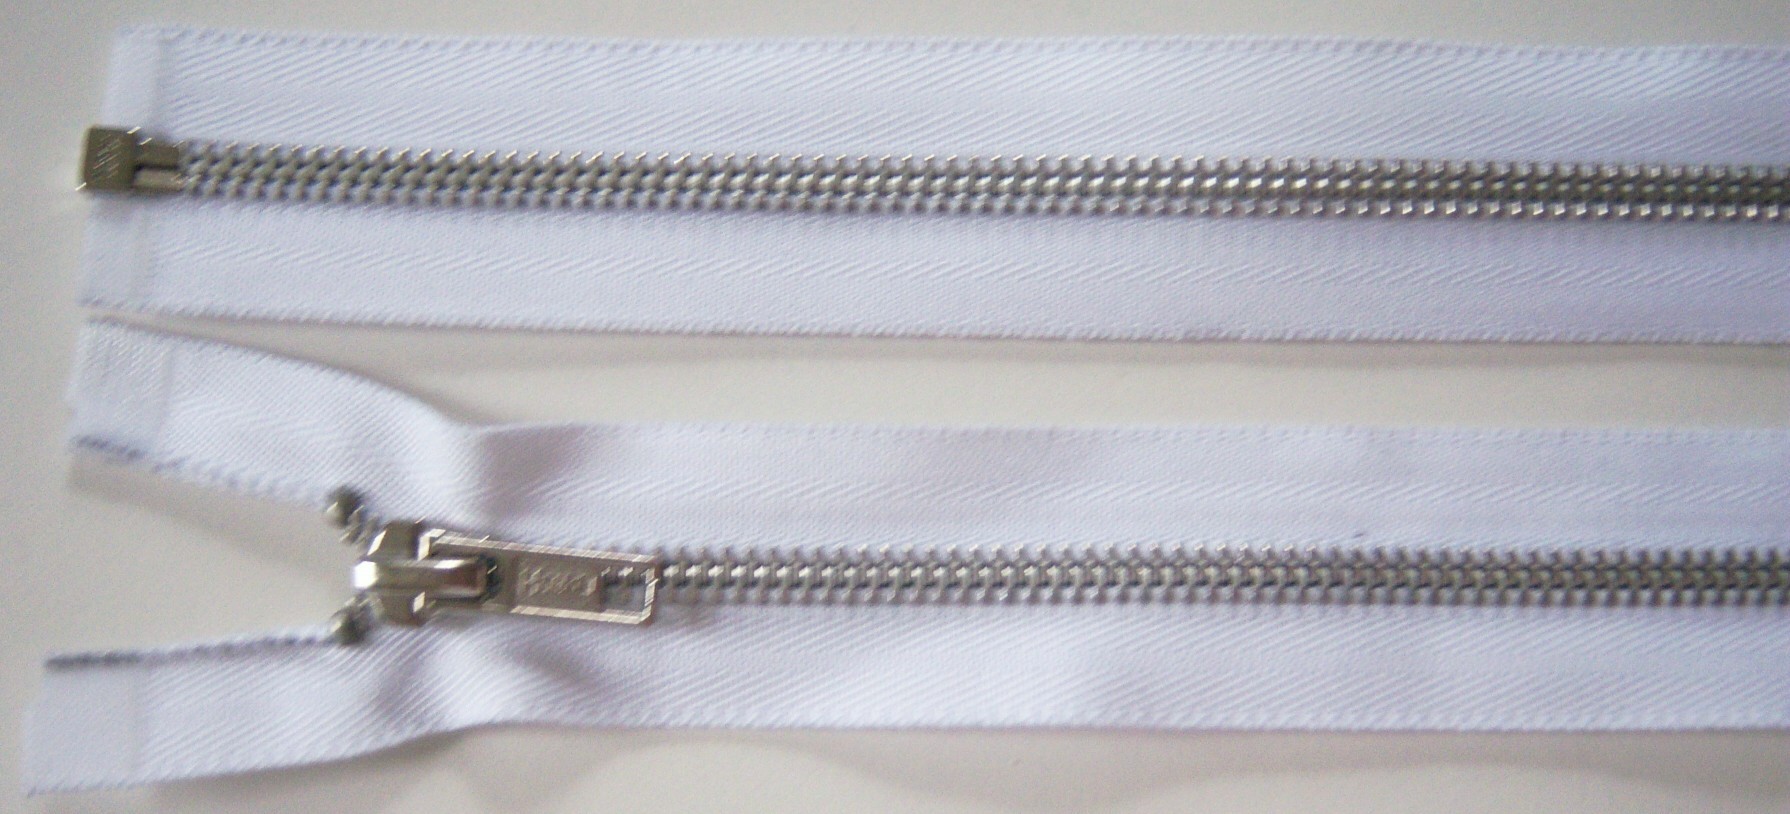 White Ideal 24 1/2" Metal Separating Parka Zipper